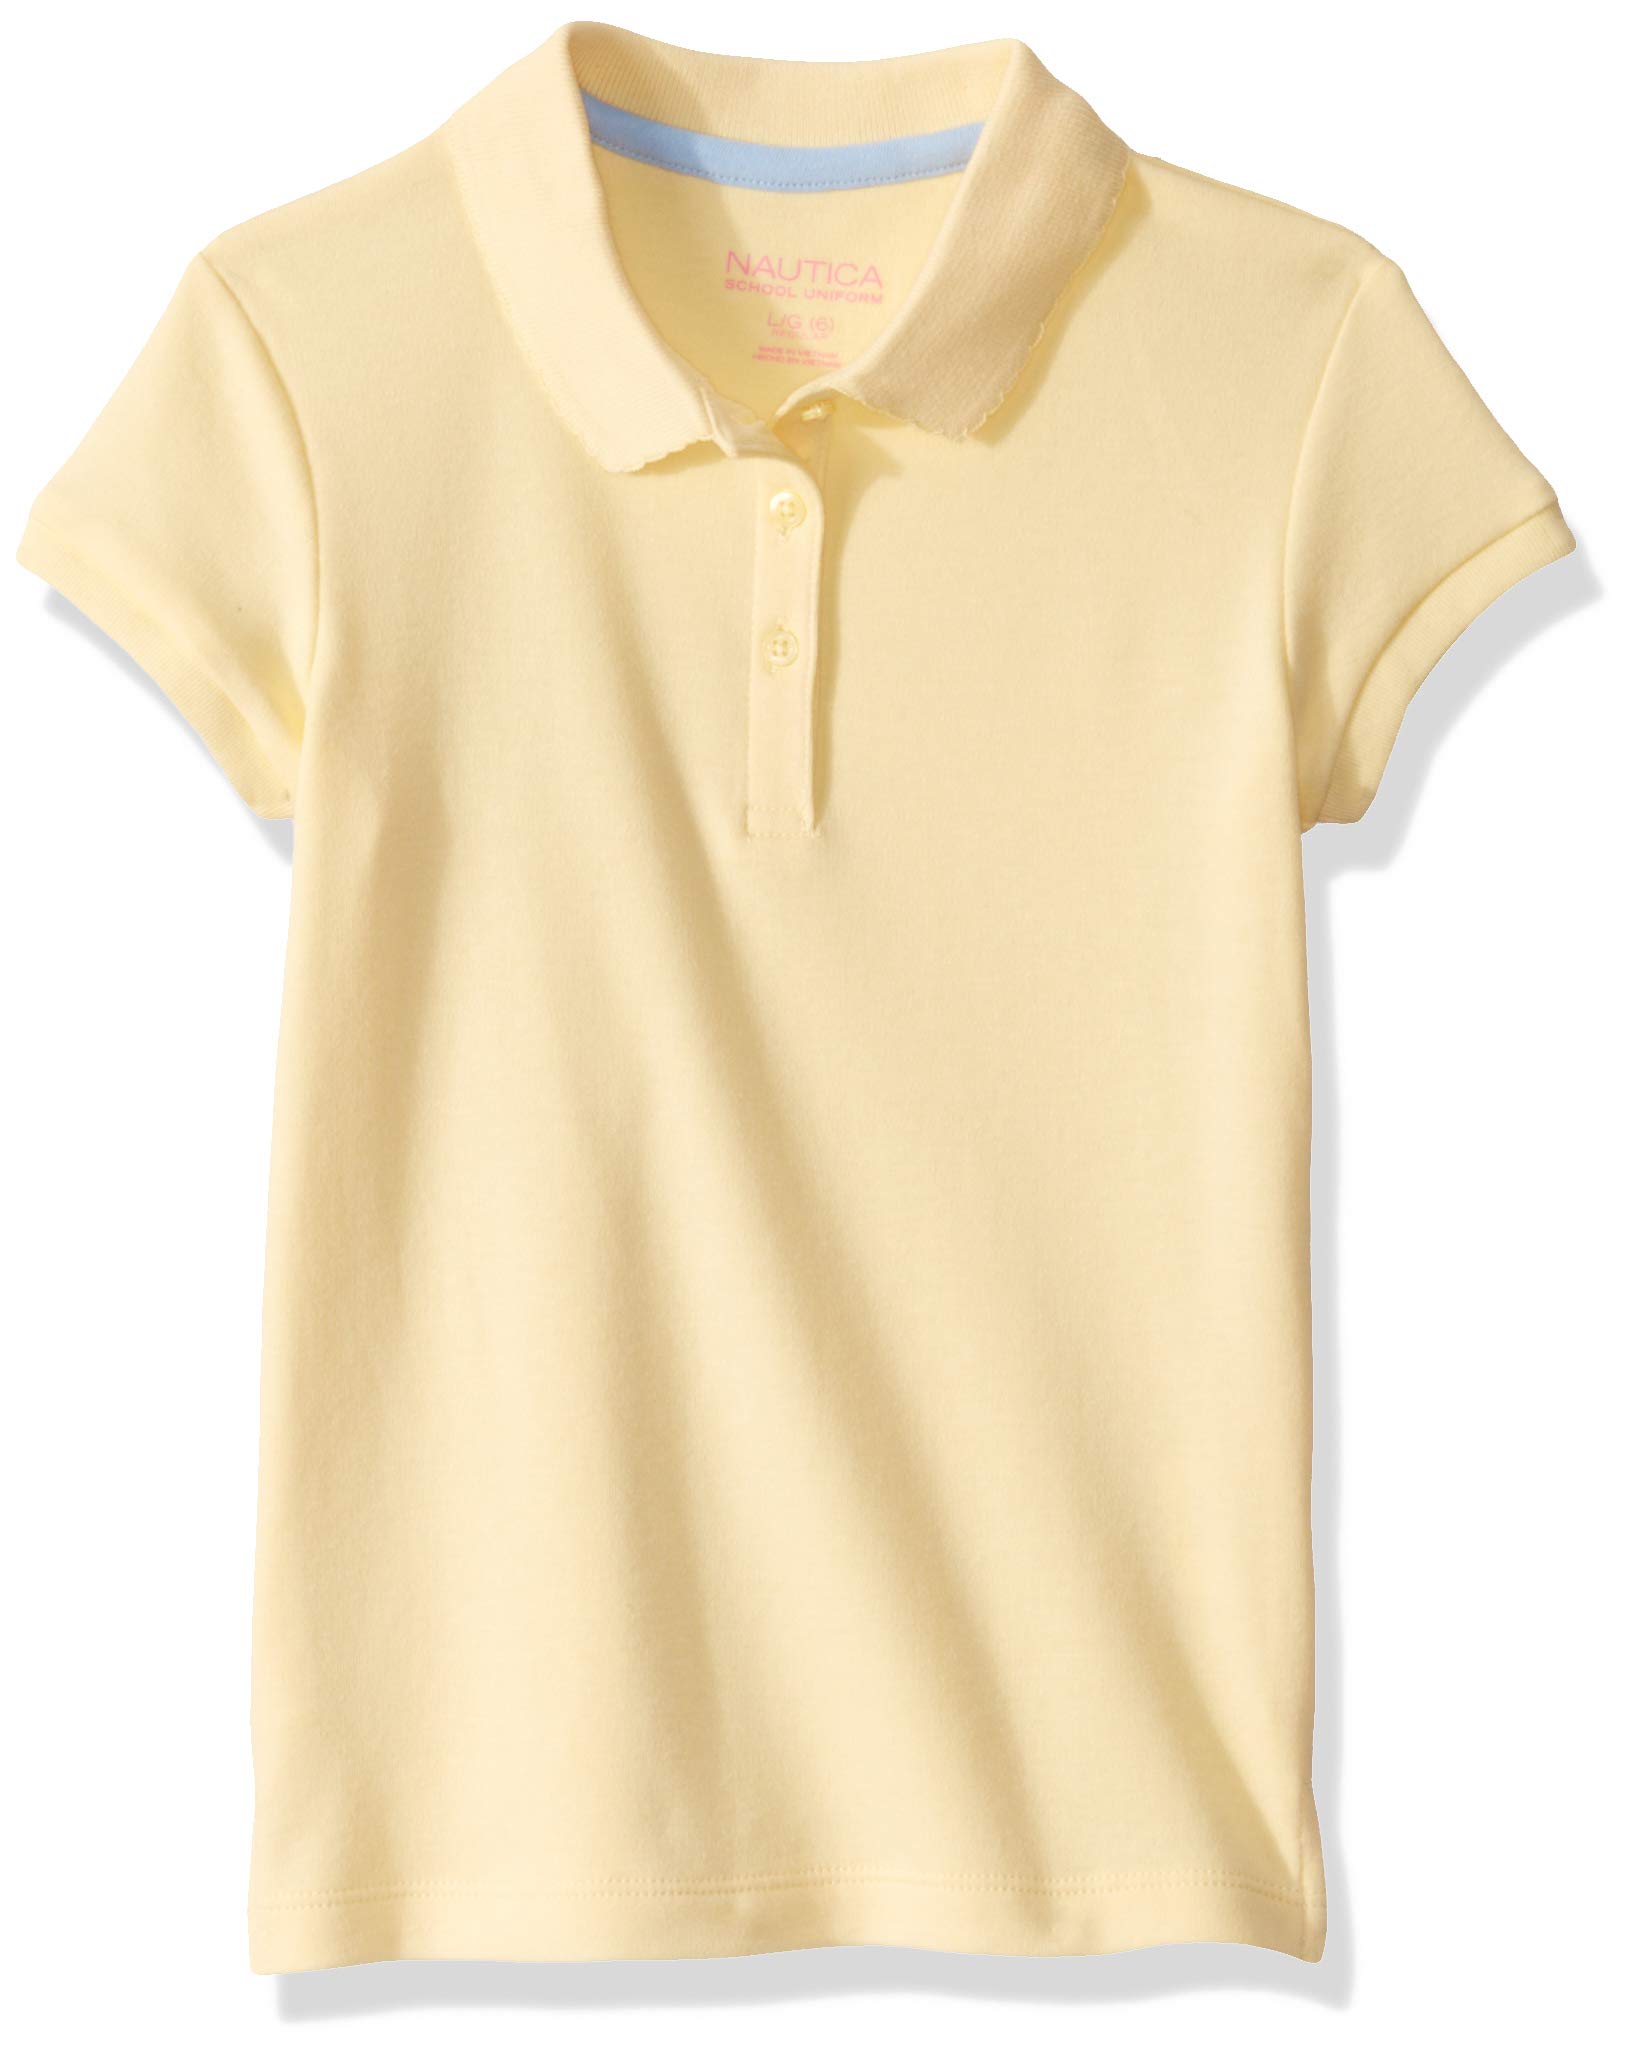 Nautica Girls' Little School Uniform Short Sleeve Polo Shirt, Button Closure, Soft Pique Fabric